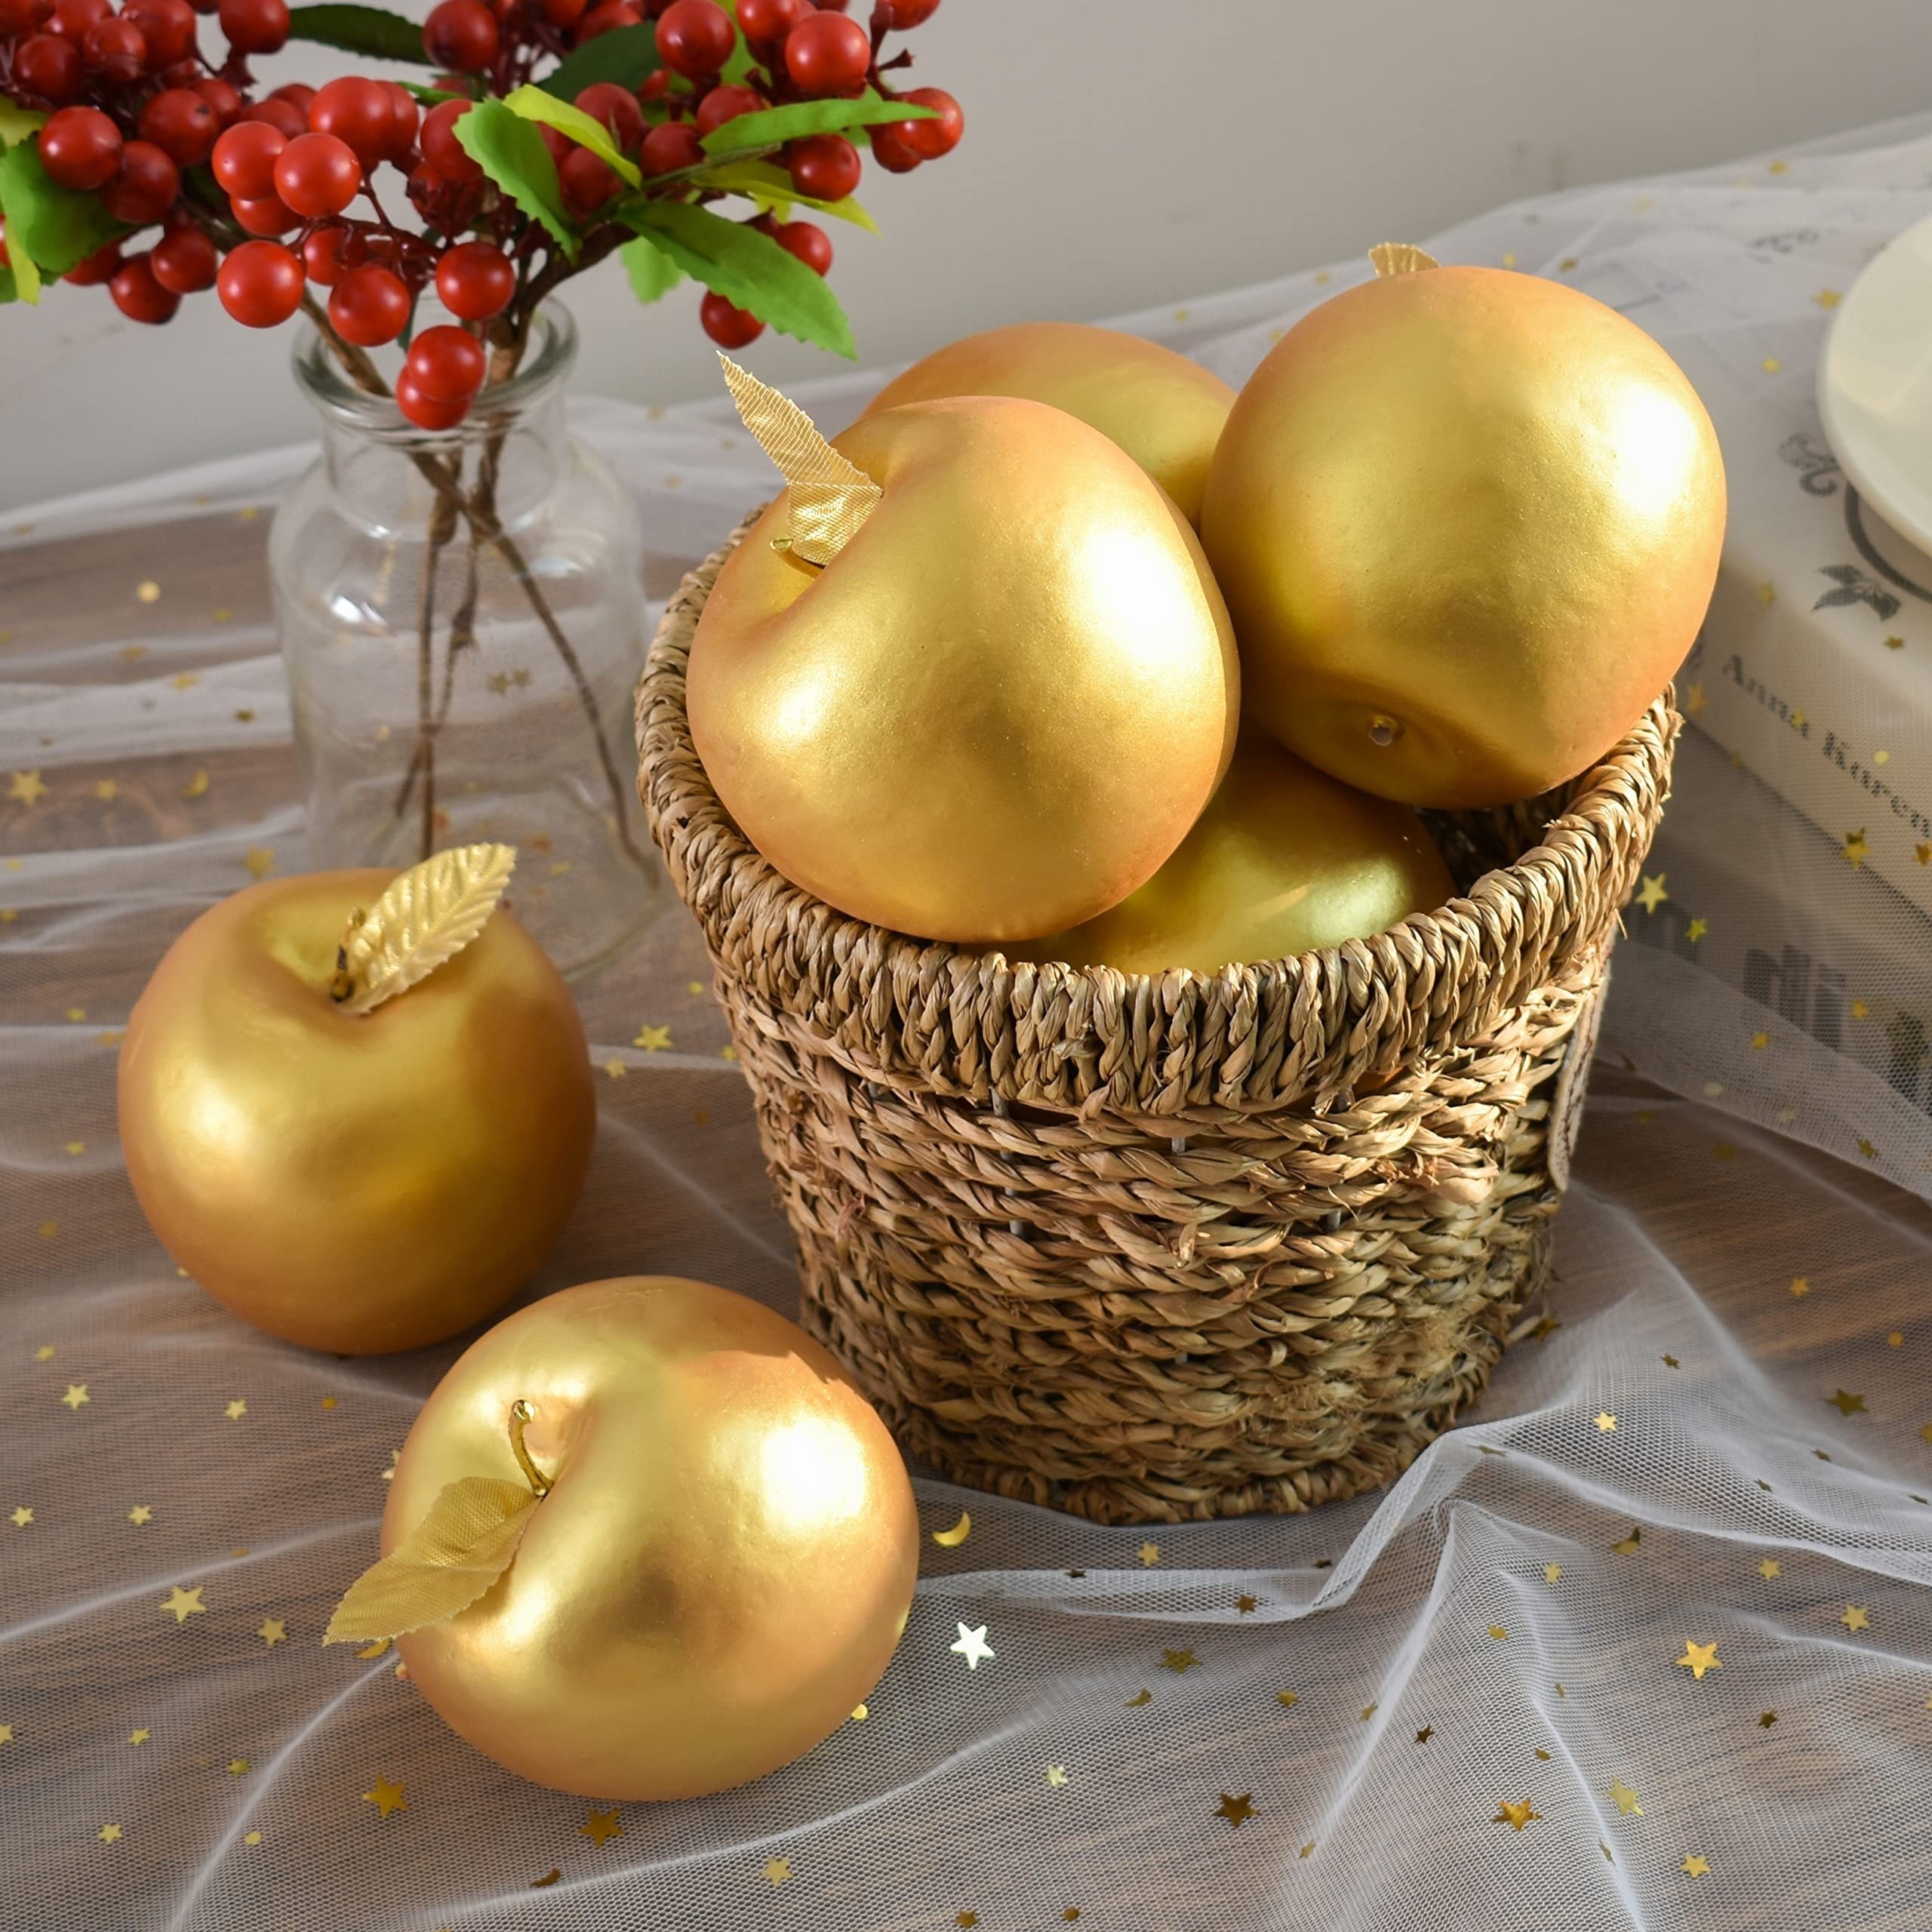 Lorigun 6 Pcs Golden Apples Golden Fruit Crafts Home Decoration Christmas Decor